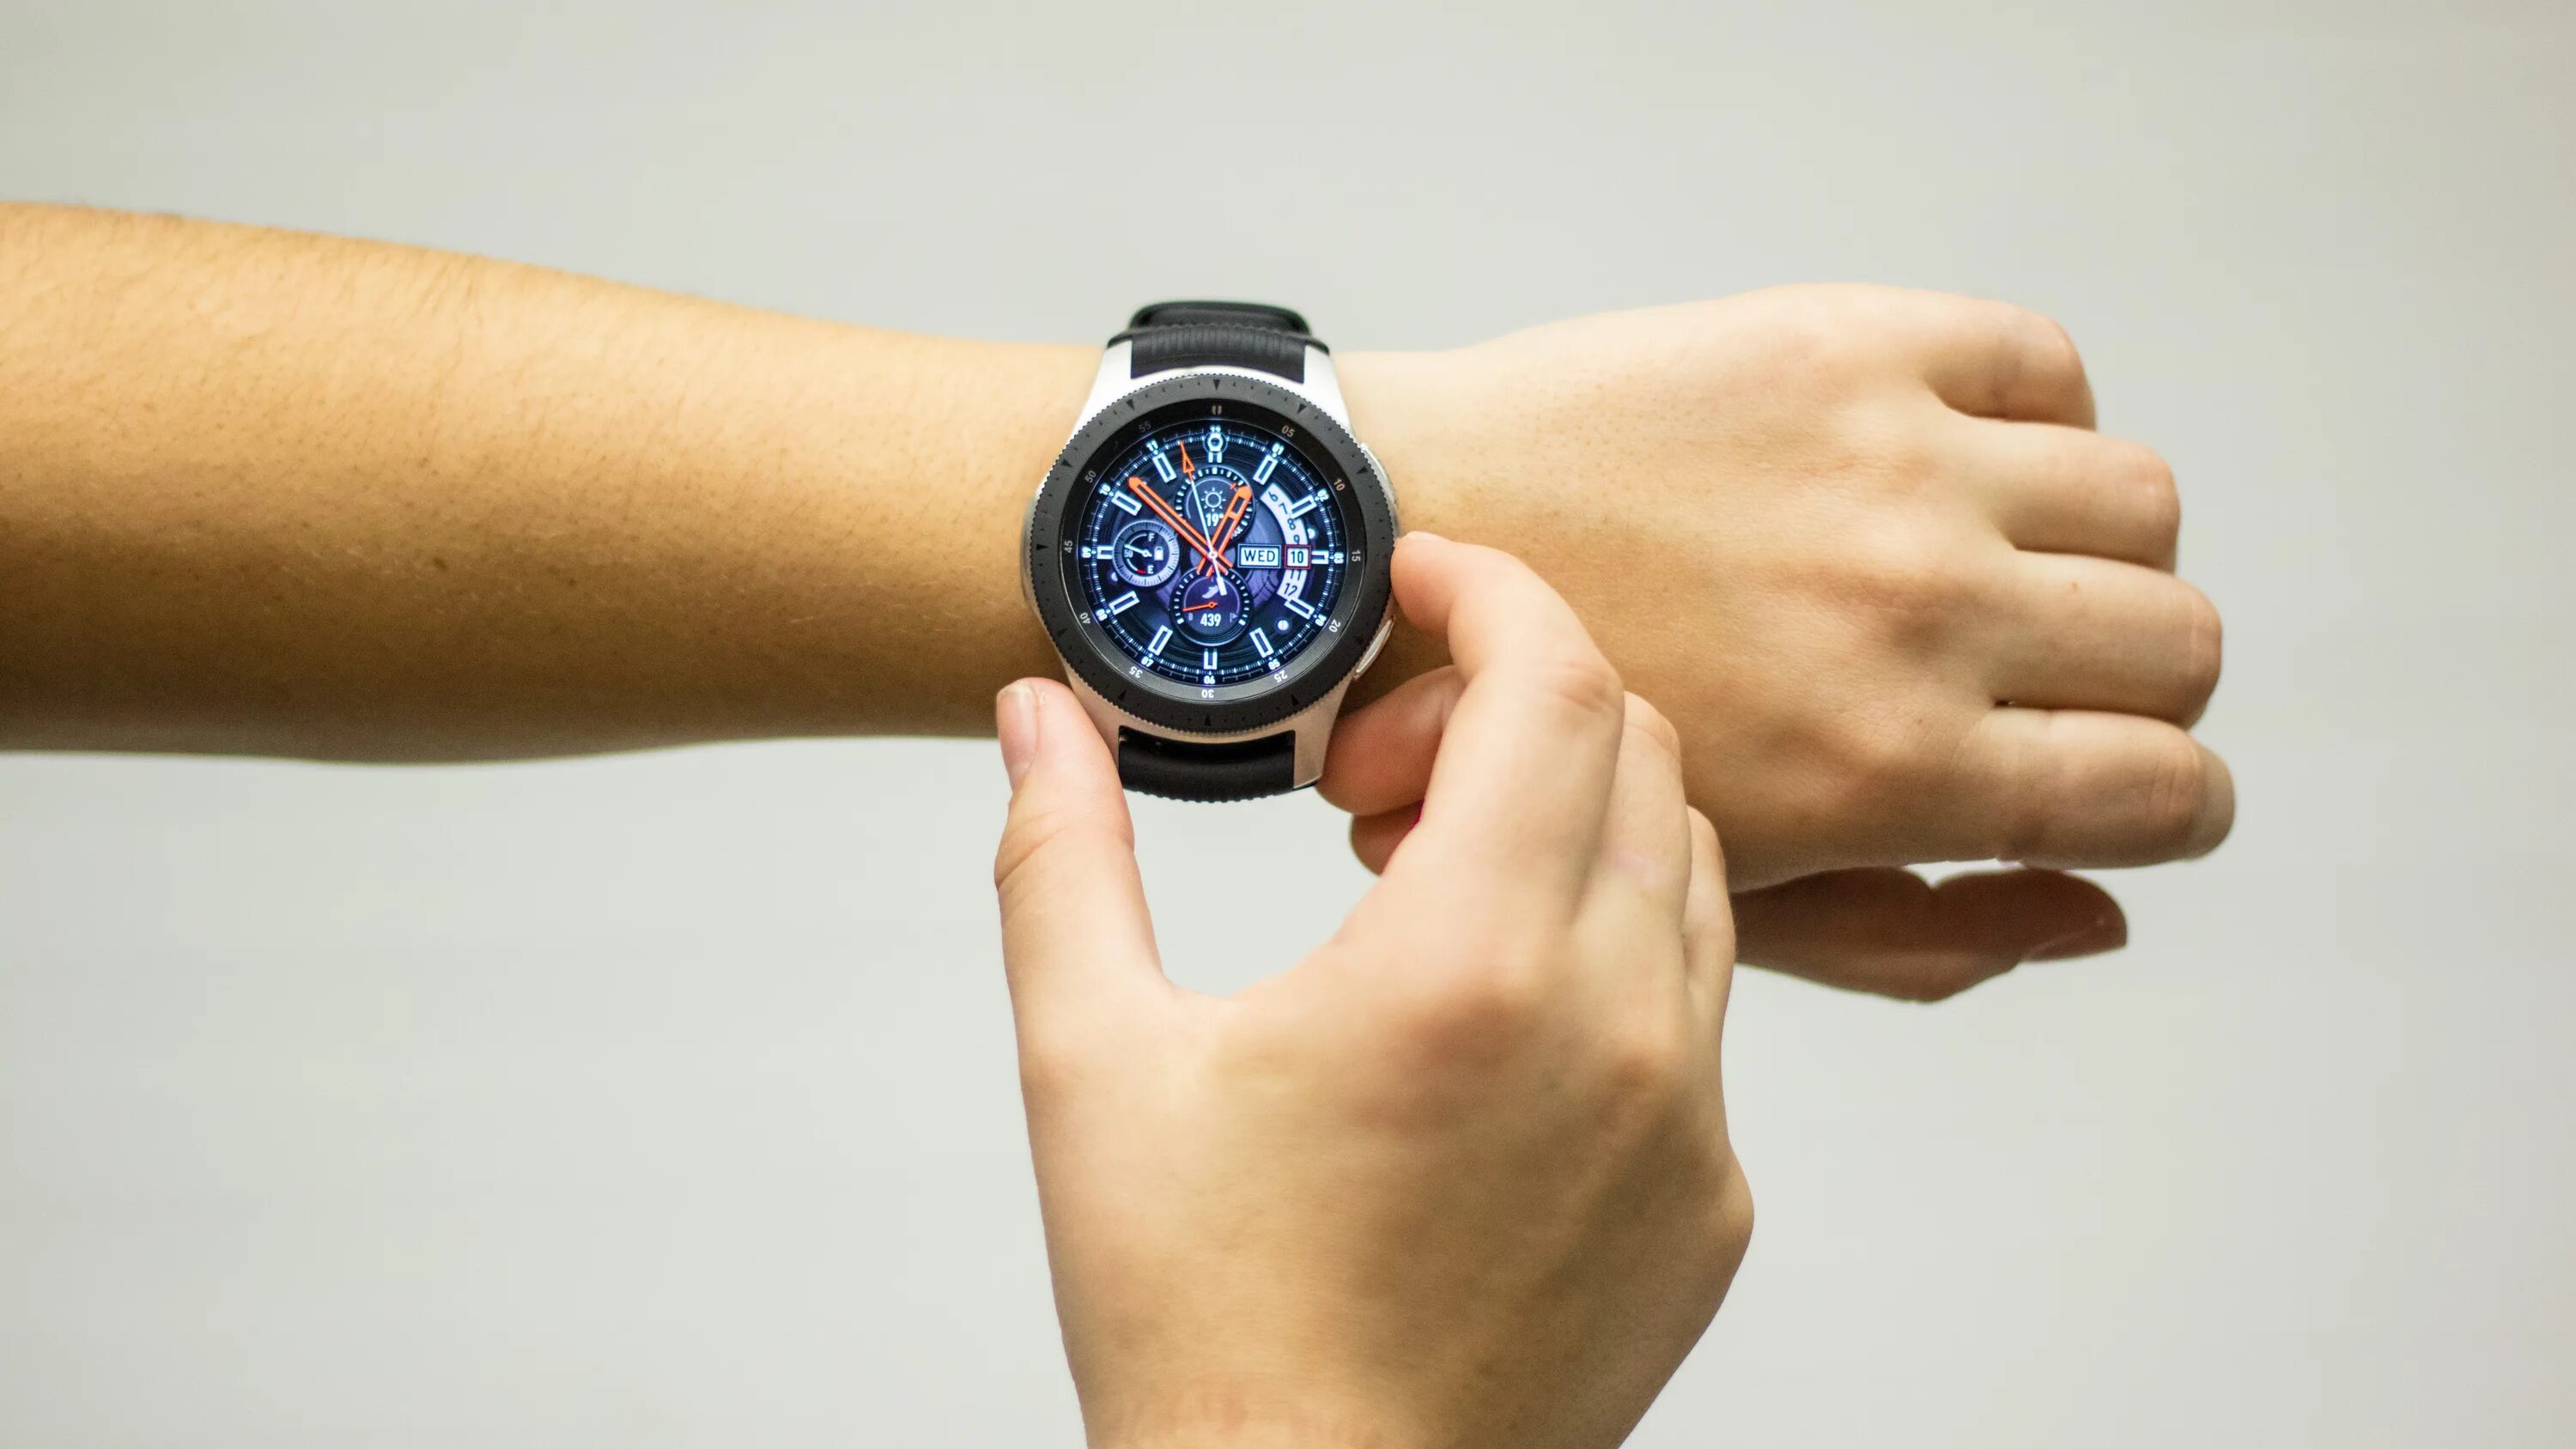 Samsung Galaxy watch 4 46. Samsung Galaxy watch 4 46mm. Samsung Galaxy watch 46мм. Galaxy watch 4 Classic 46 мм. Обзор часов самсунг galaxy watch